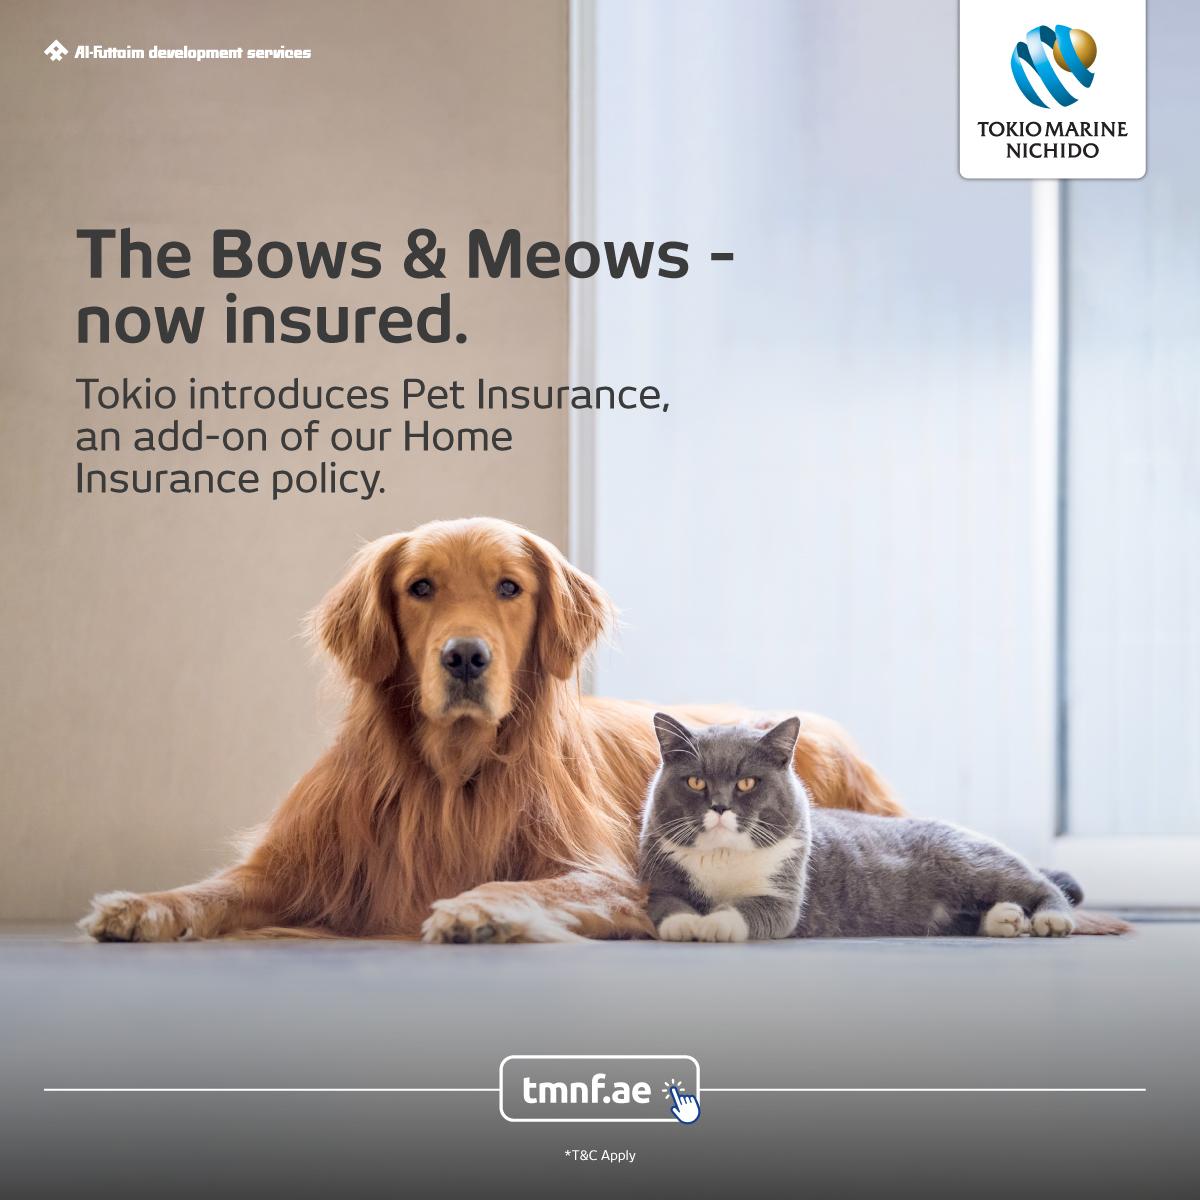 TMNF-Pets Insurance-06